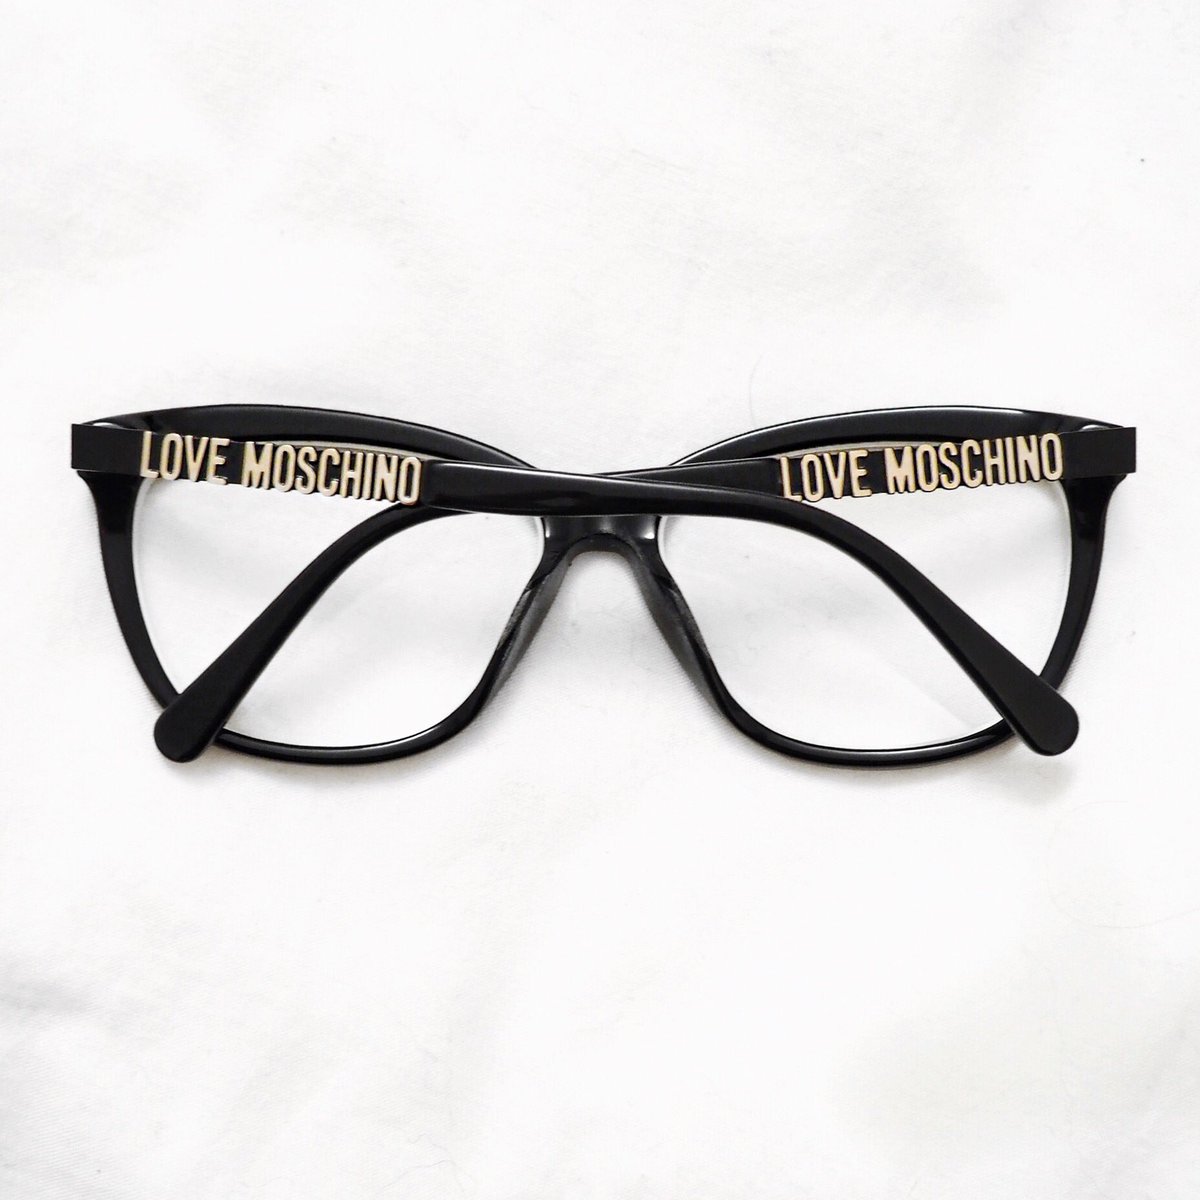 specsavers moschino glasses